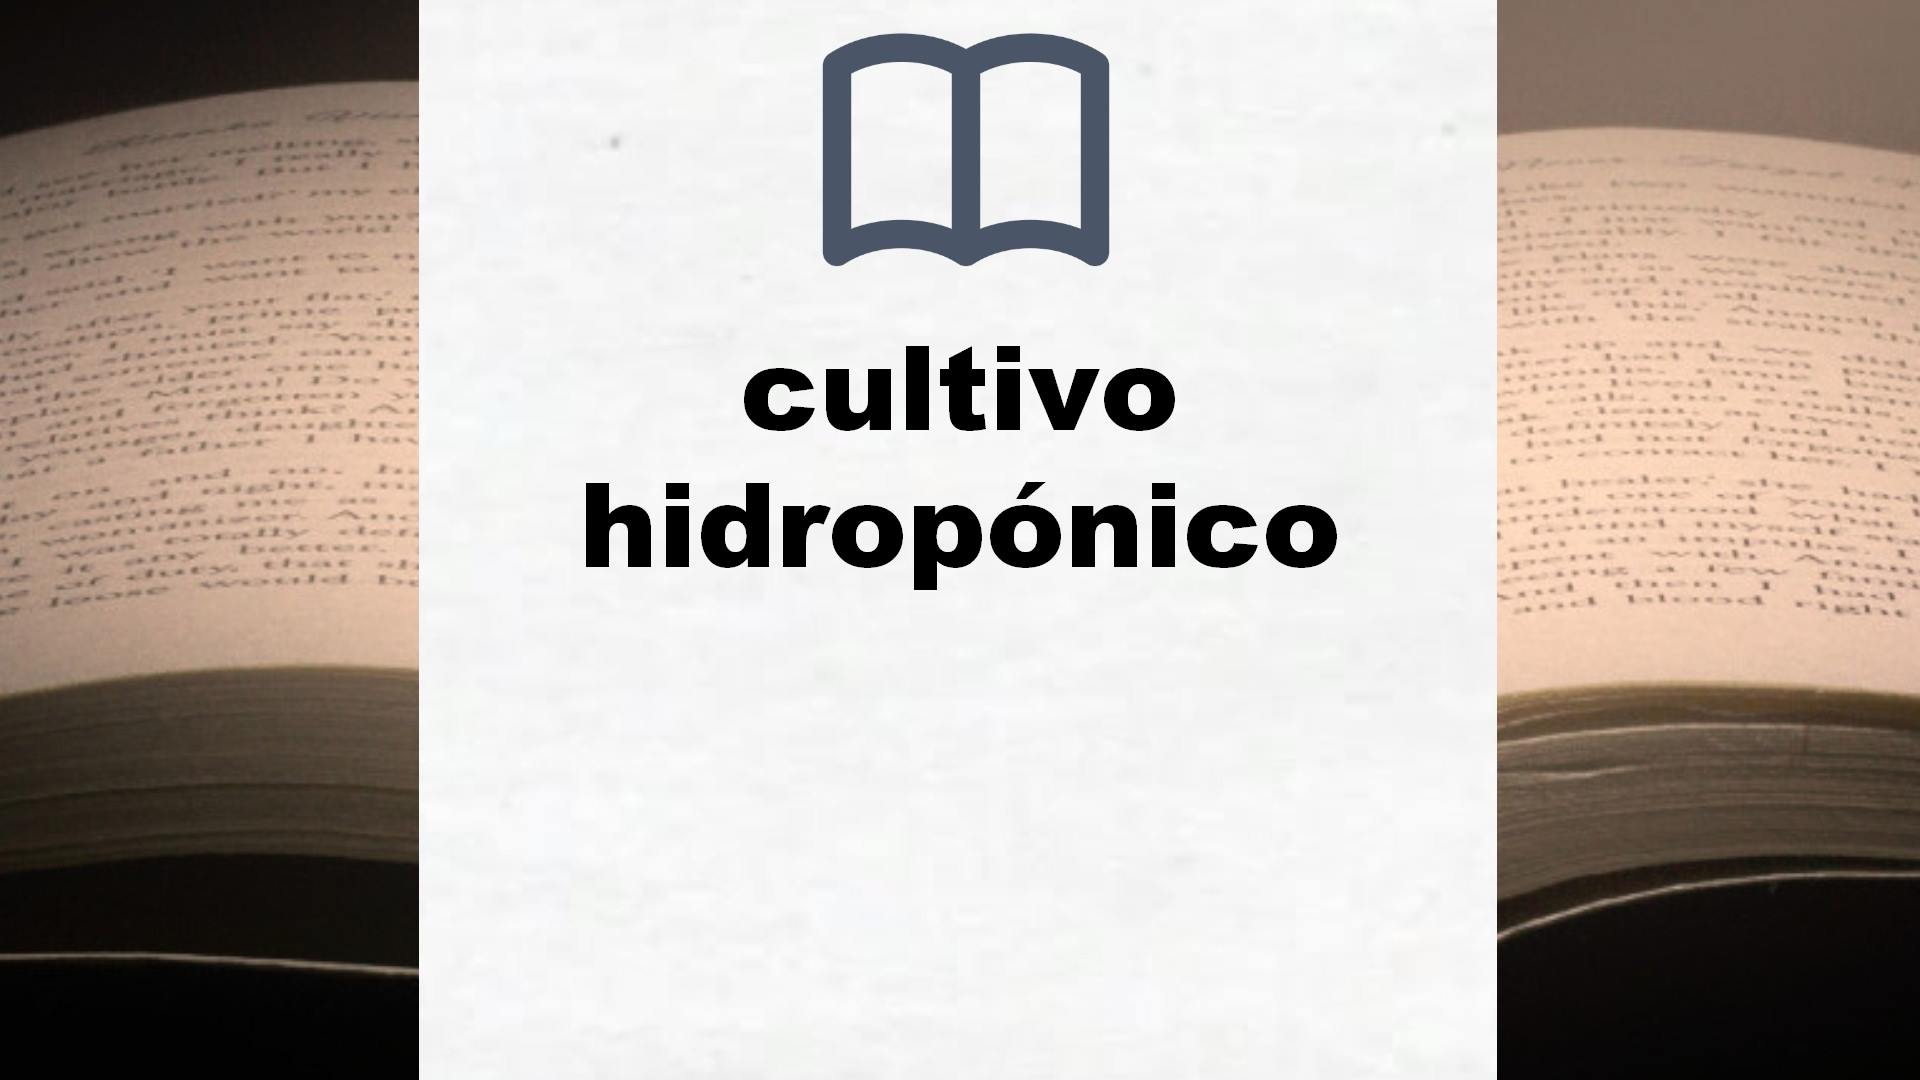 Libros sobre cultivo hidropónico